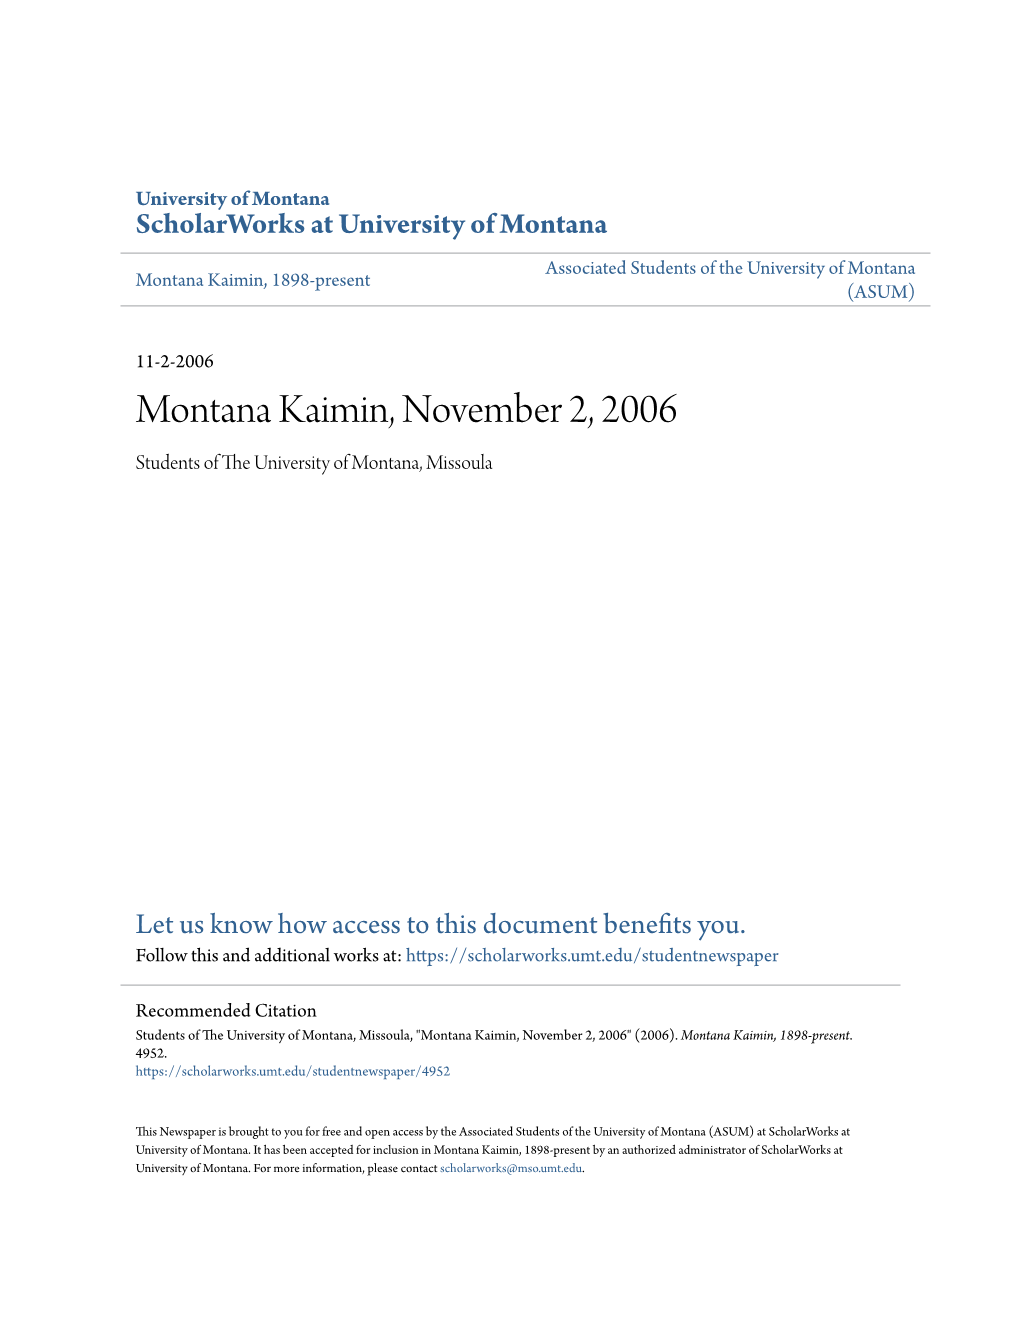 Montana Kaimin, November 2, 2006 Students of the Niu Versity of Montana, Missoula